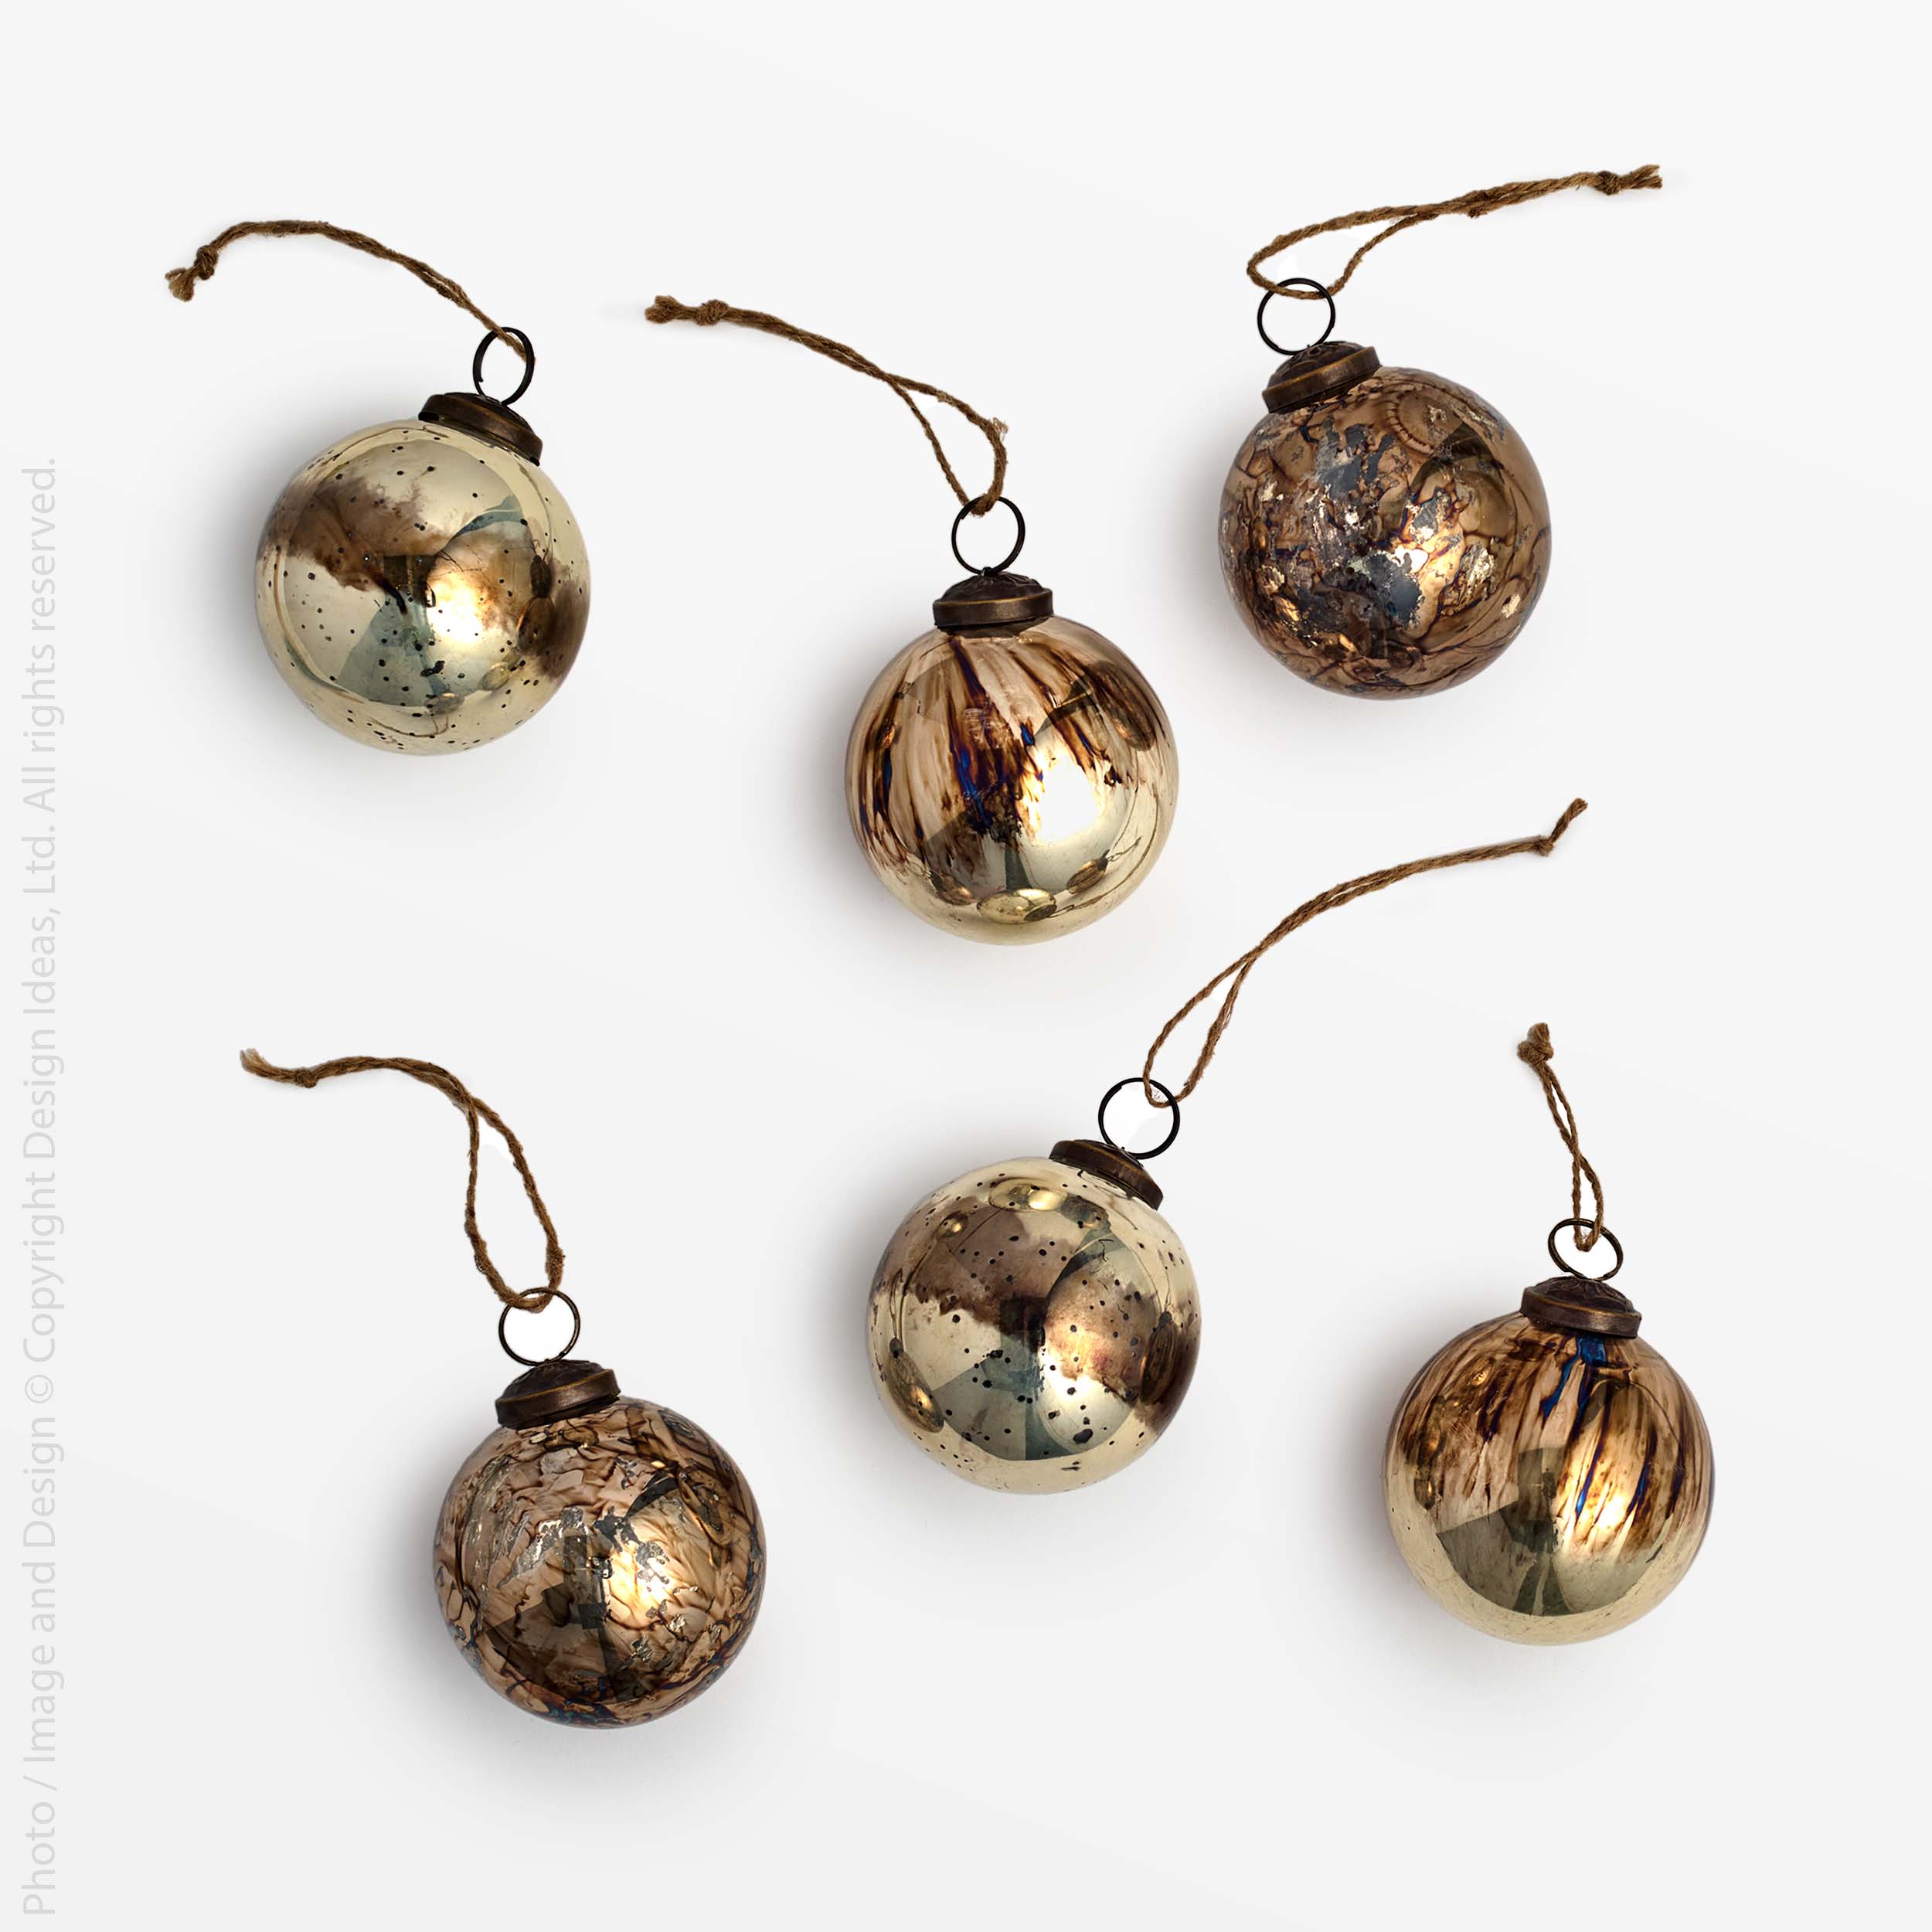 Chamonix™ Mouth Blown Glass Ornaments - 3 inch (set of 6)